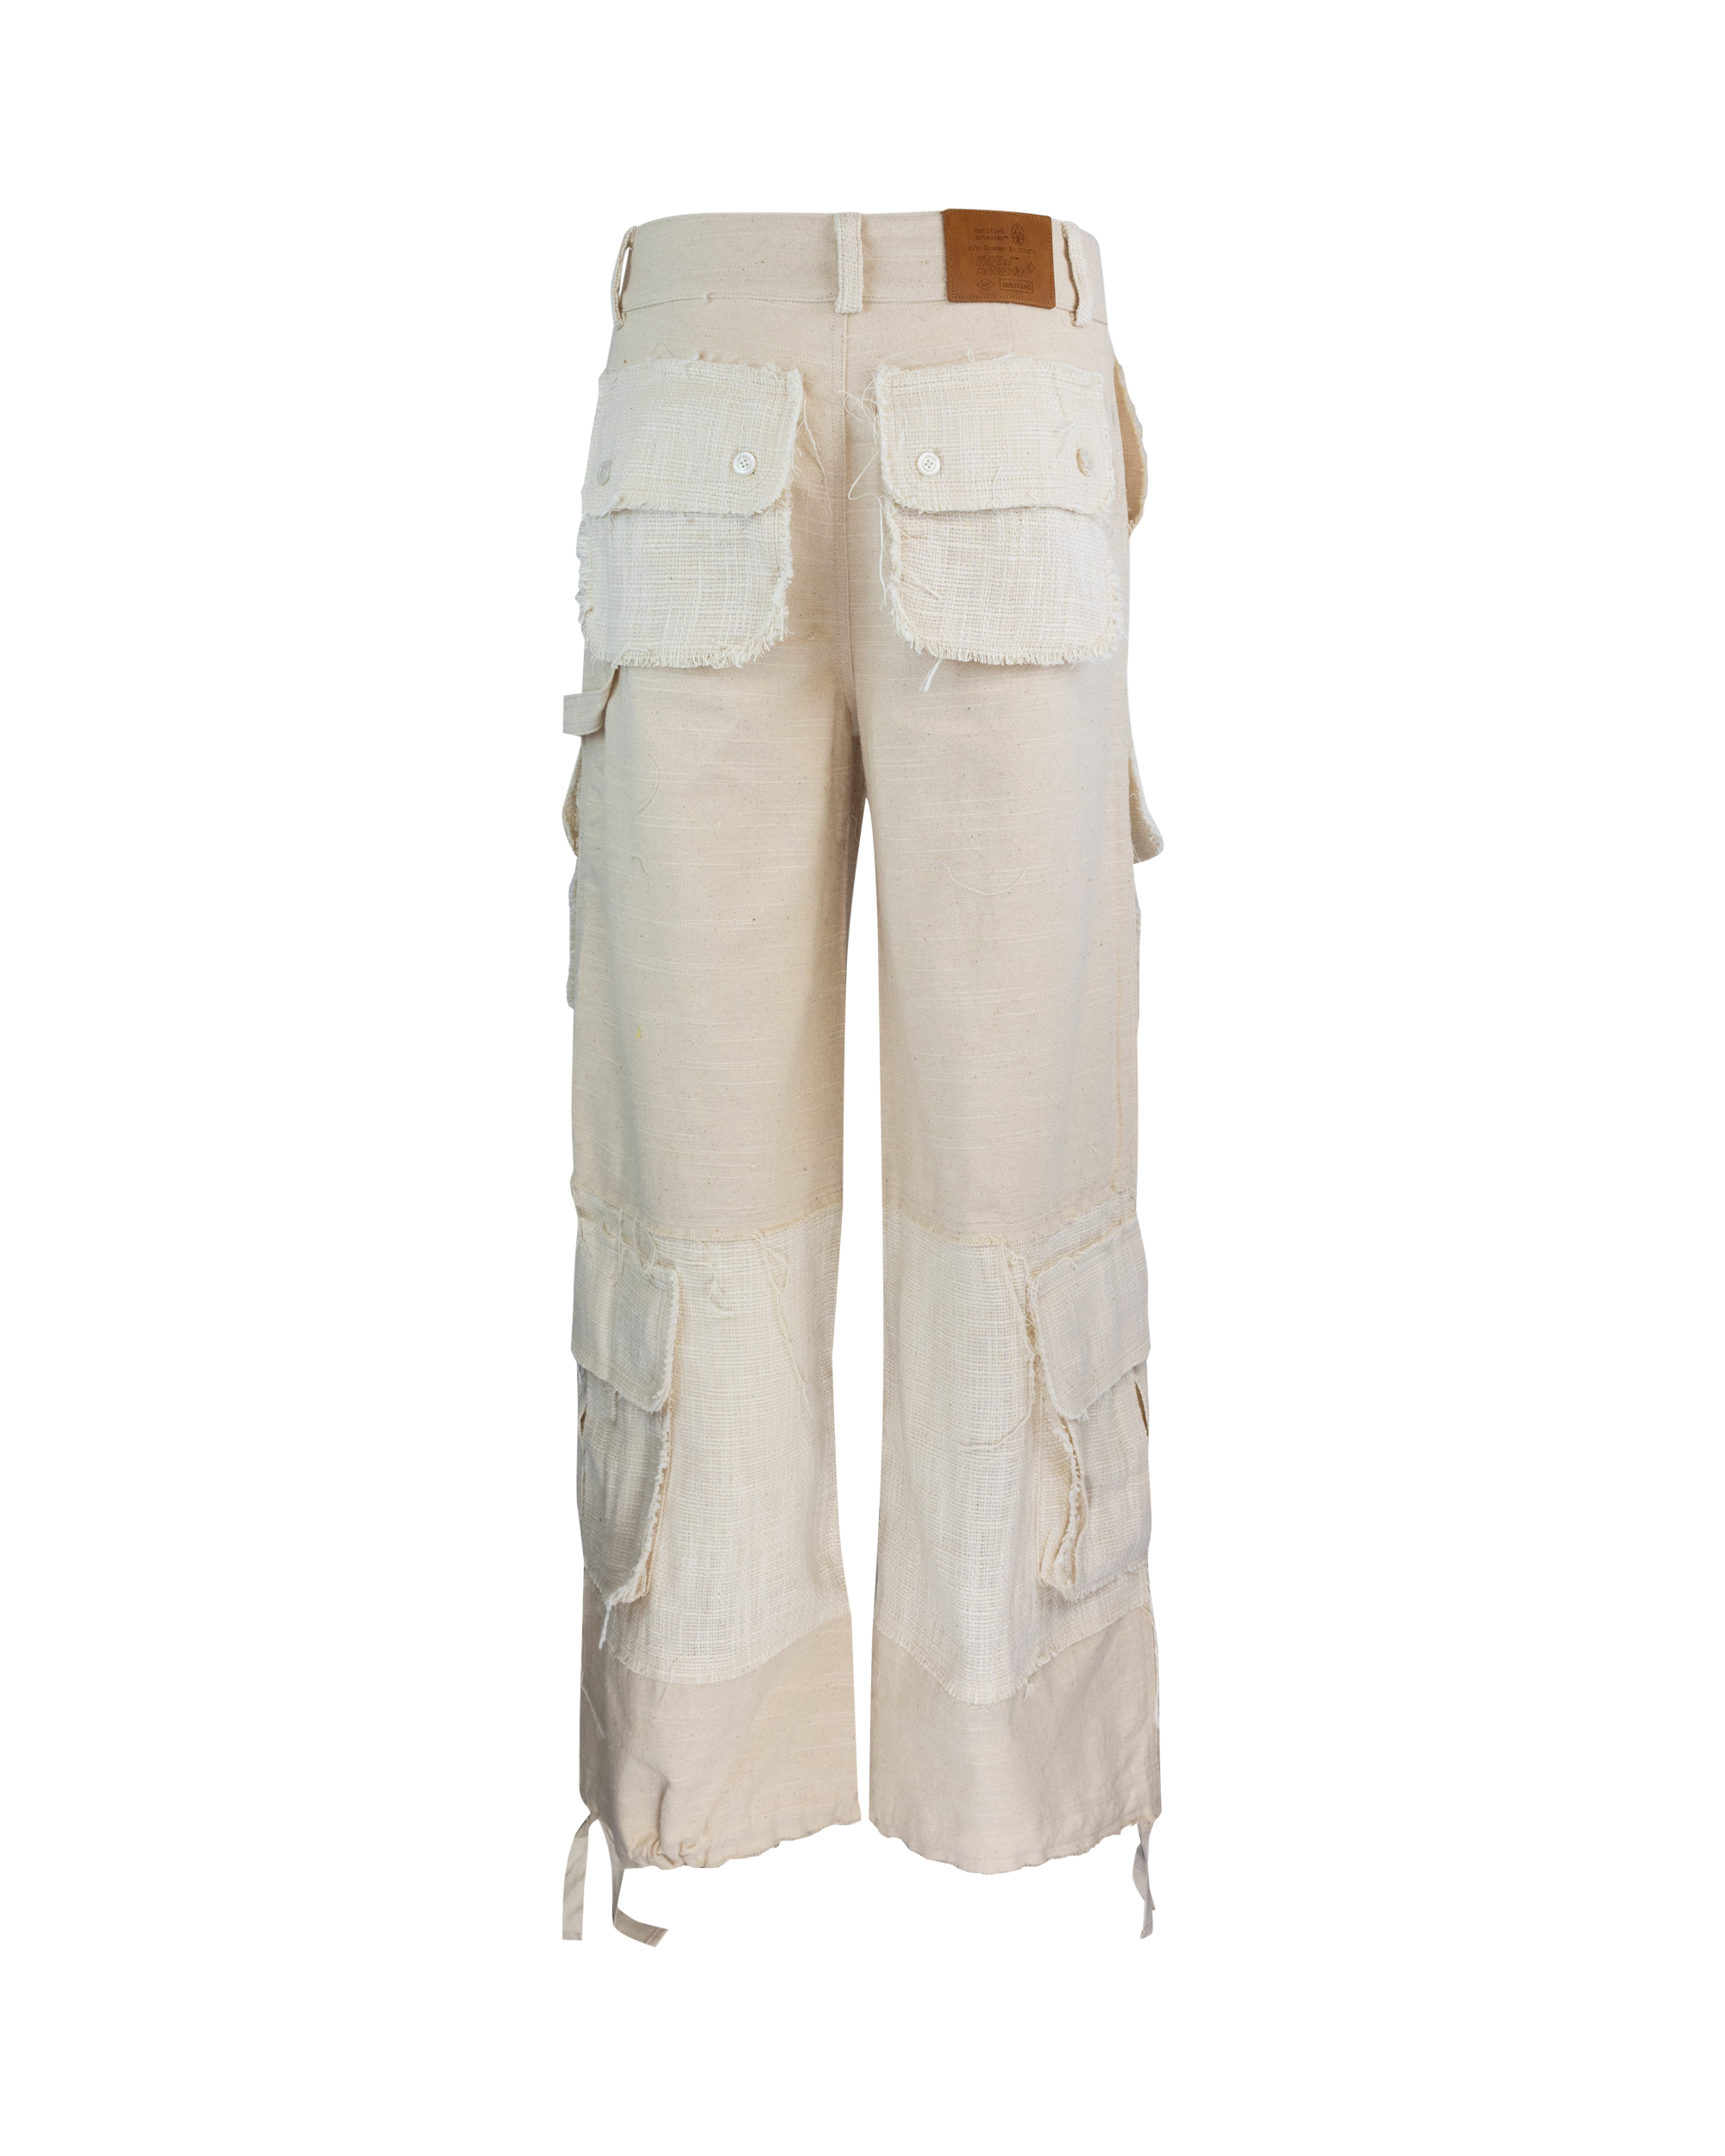 Shop Untitled Artworks Pantalone Cargo Wide White